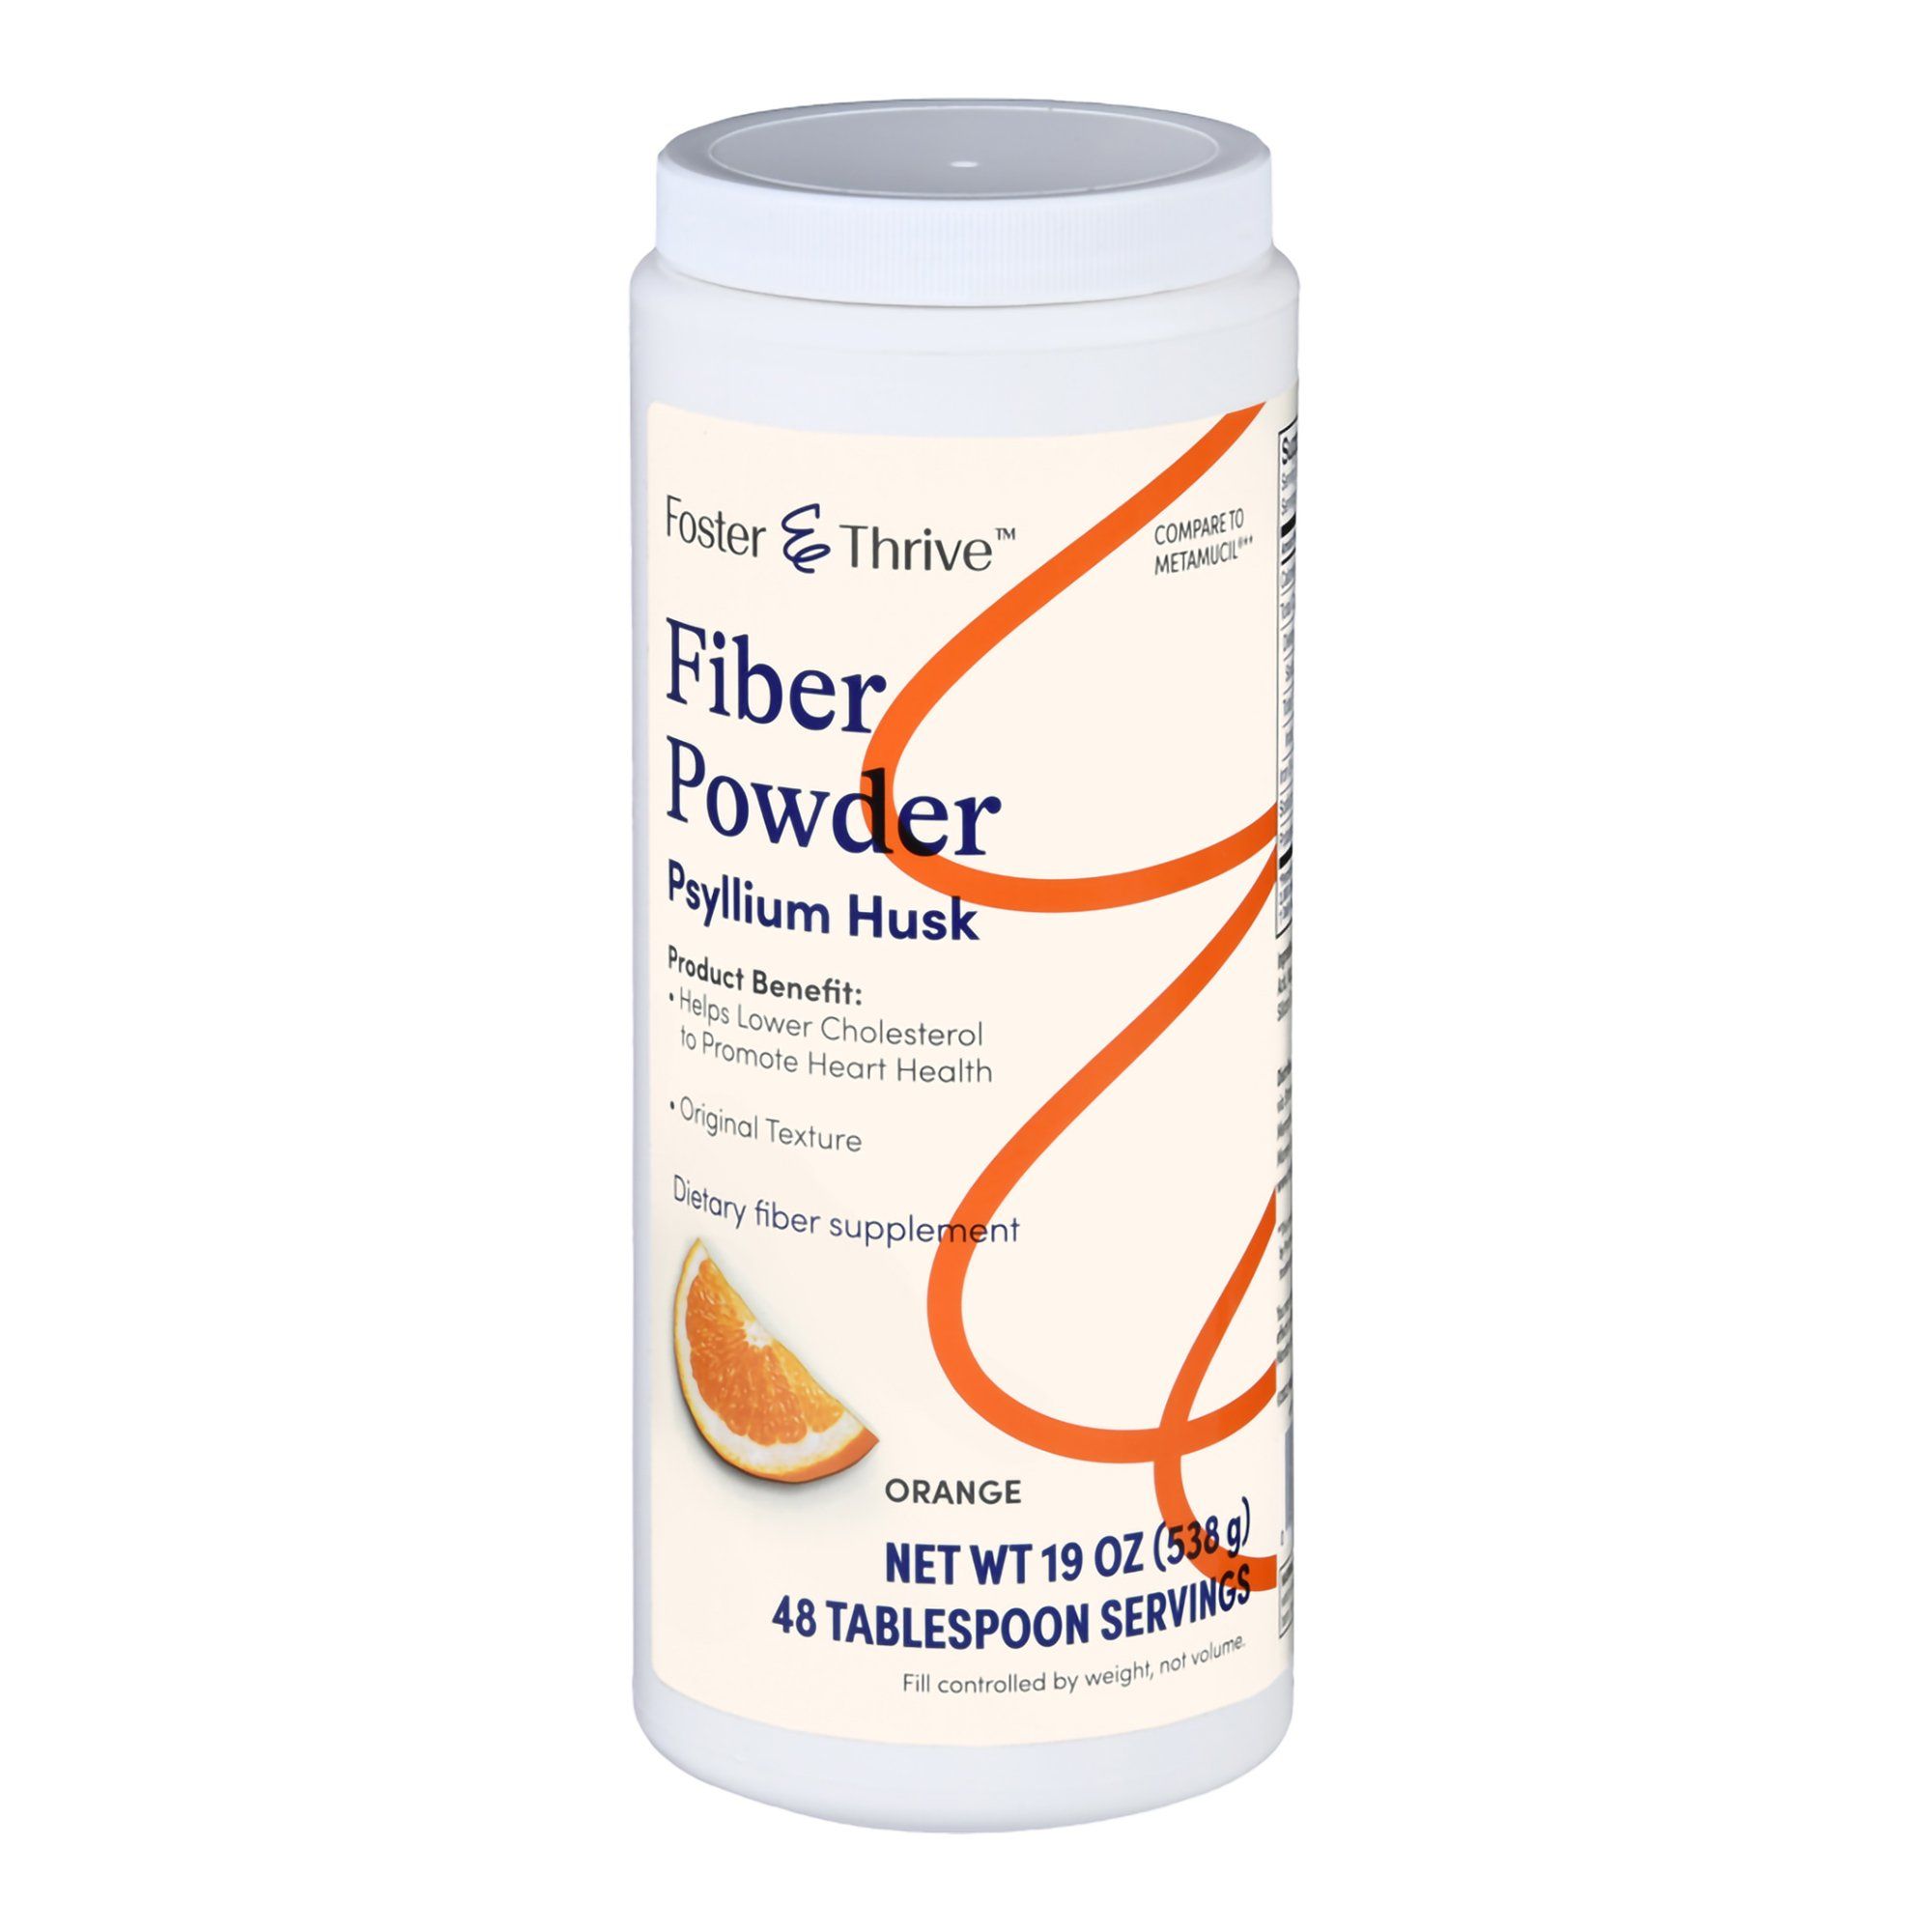 Foster & Thrive Fiber Powder, Original Texture, Orange - 19 oz